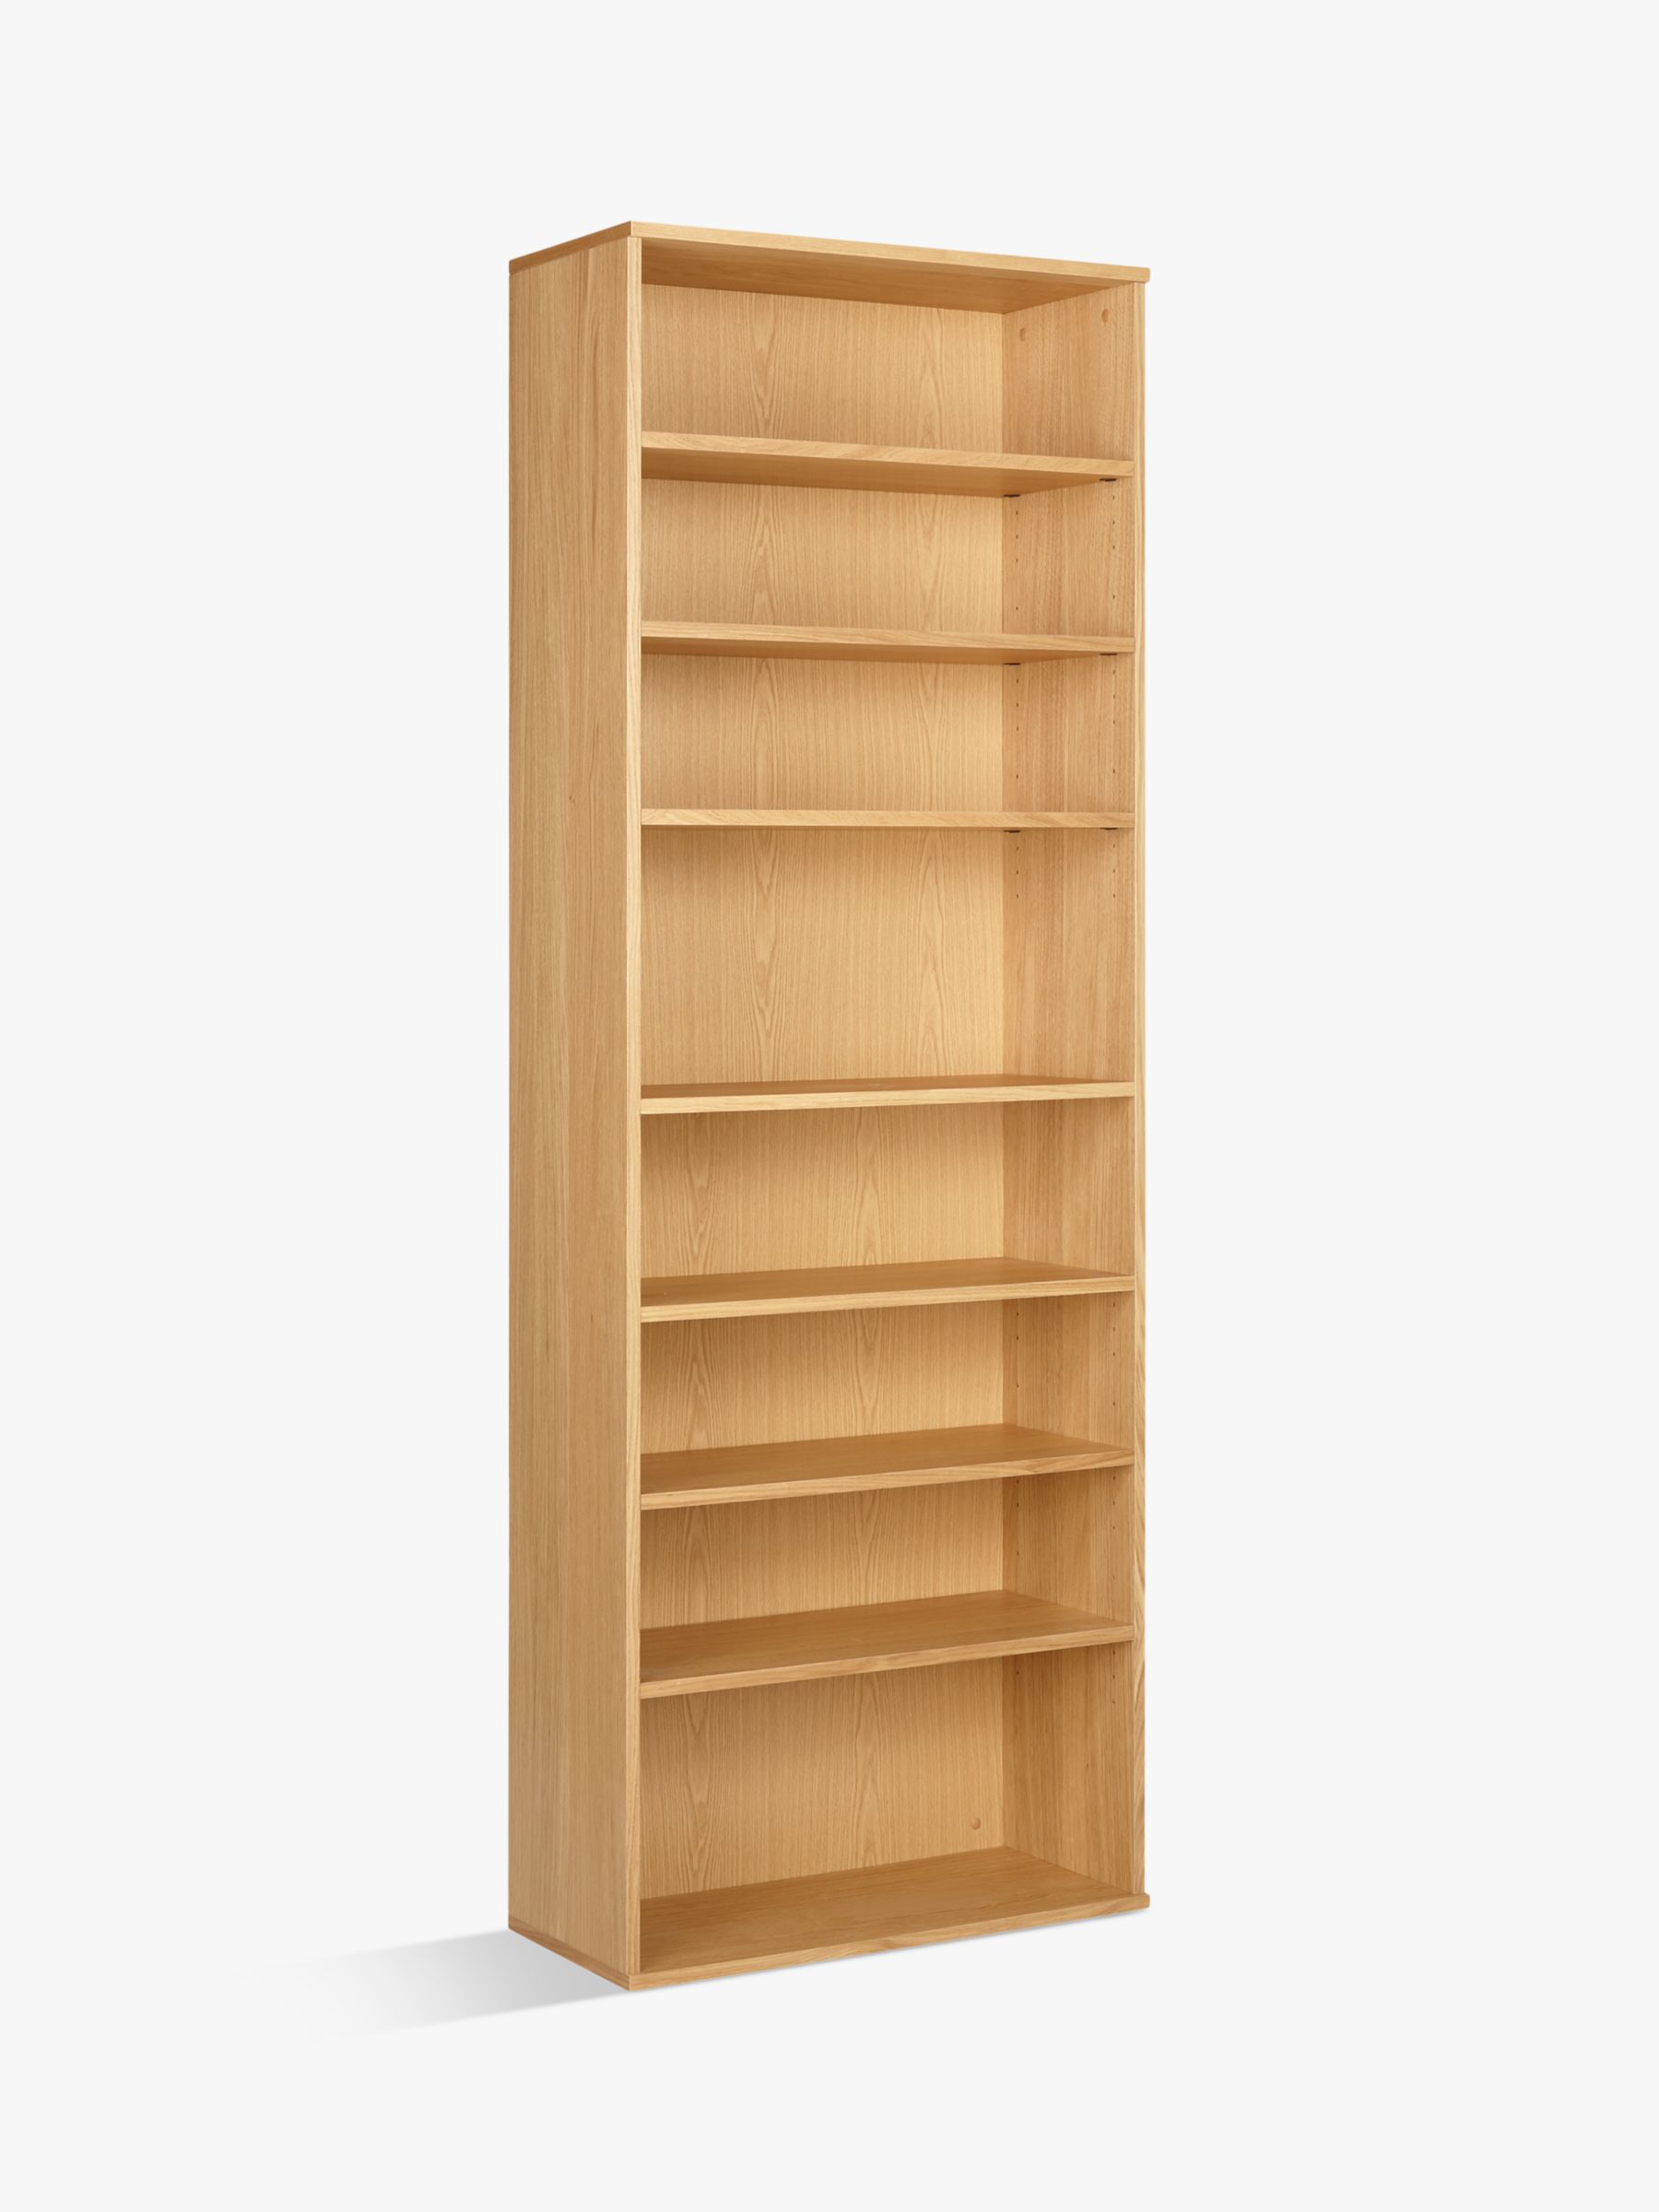 Photo of John lewis abacus 7 shelf bookcase fsc-certified